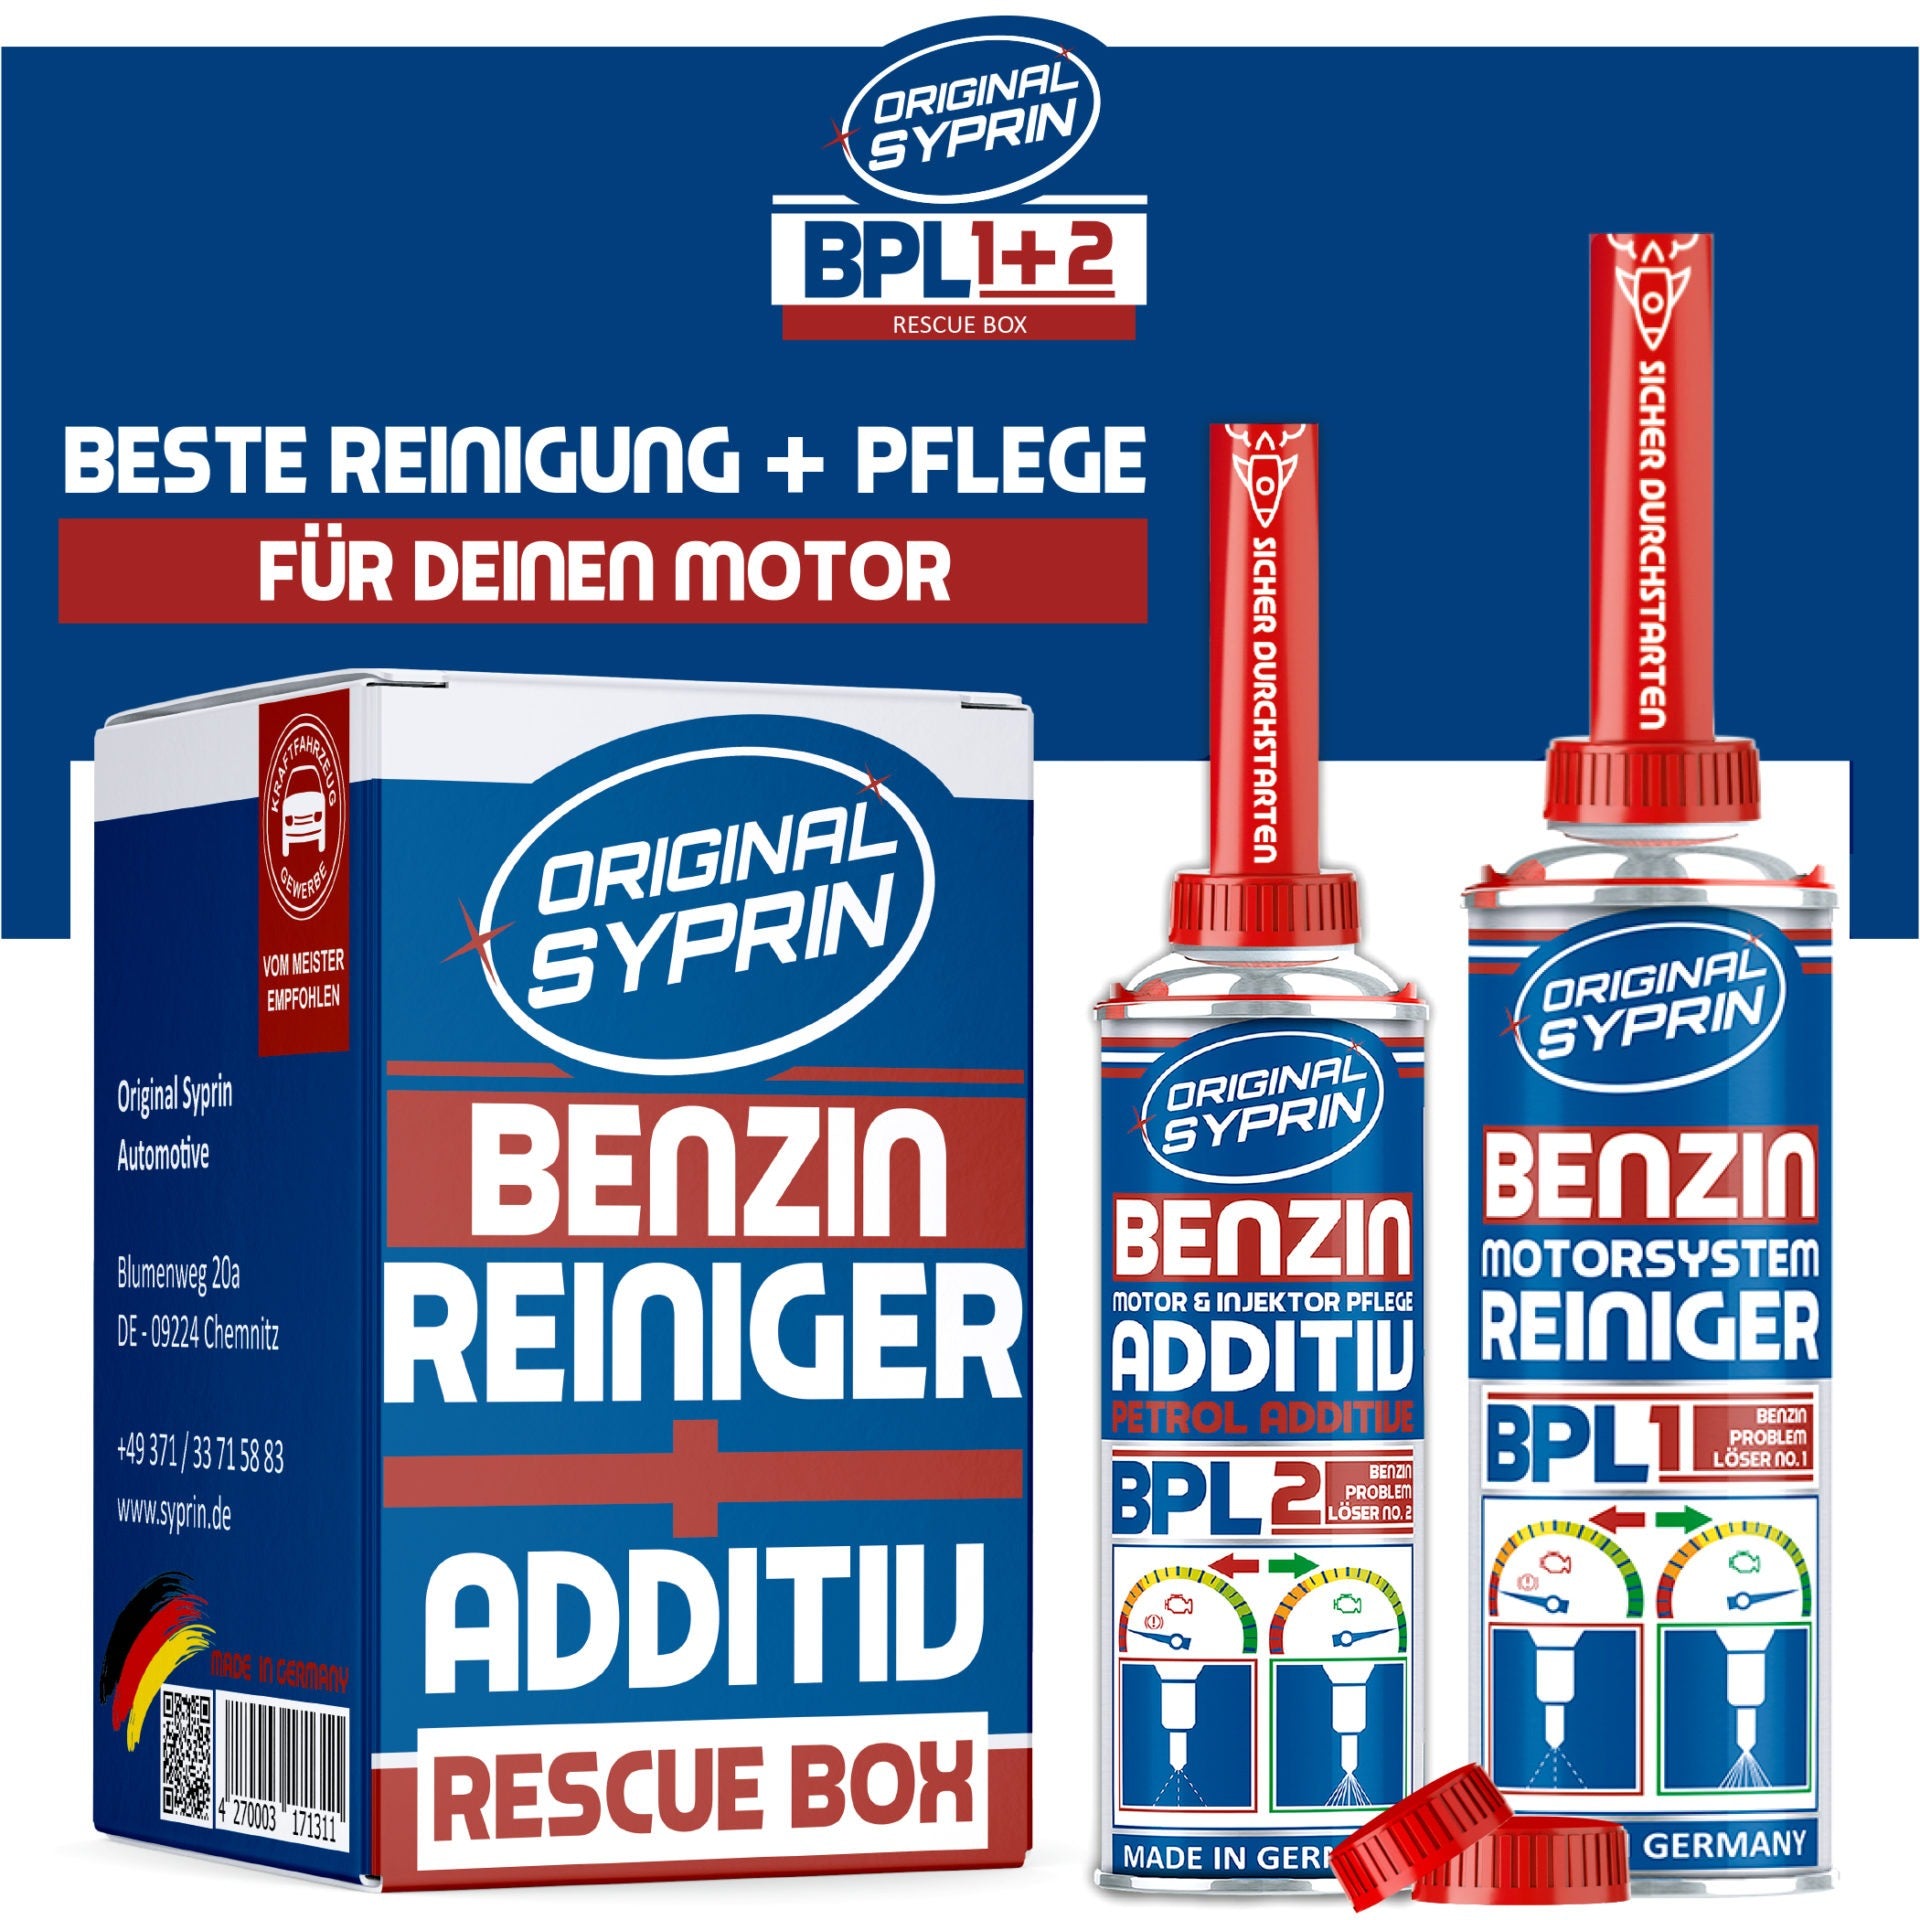 ORIGINAL SYPRIN Benzin Rescue Box - Reiniger und Additiv - 500ml + 2 –  syprin